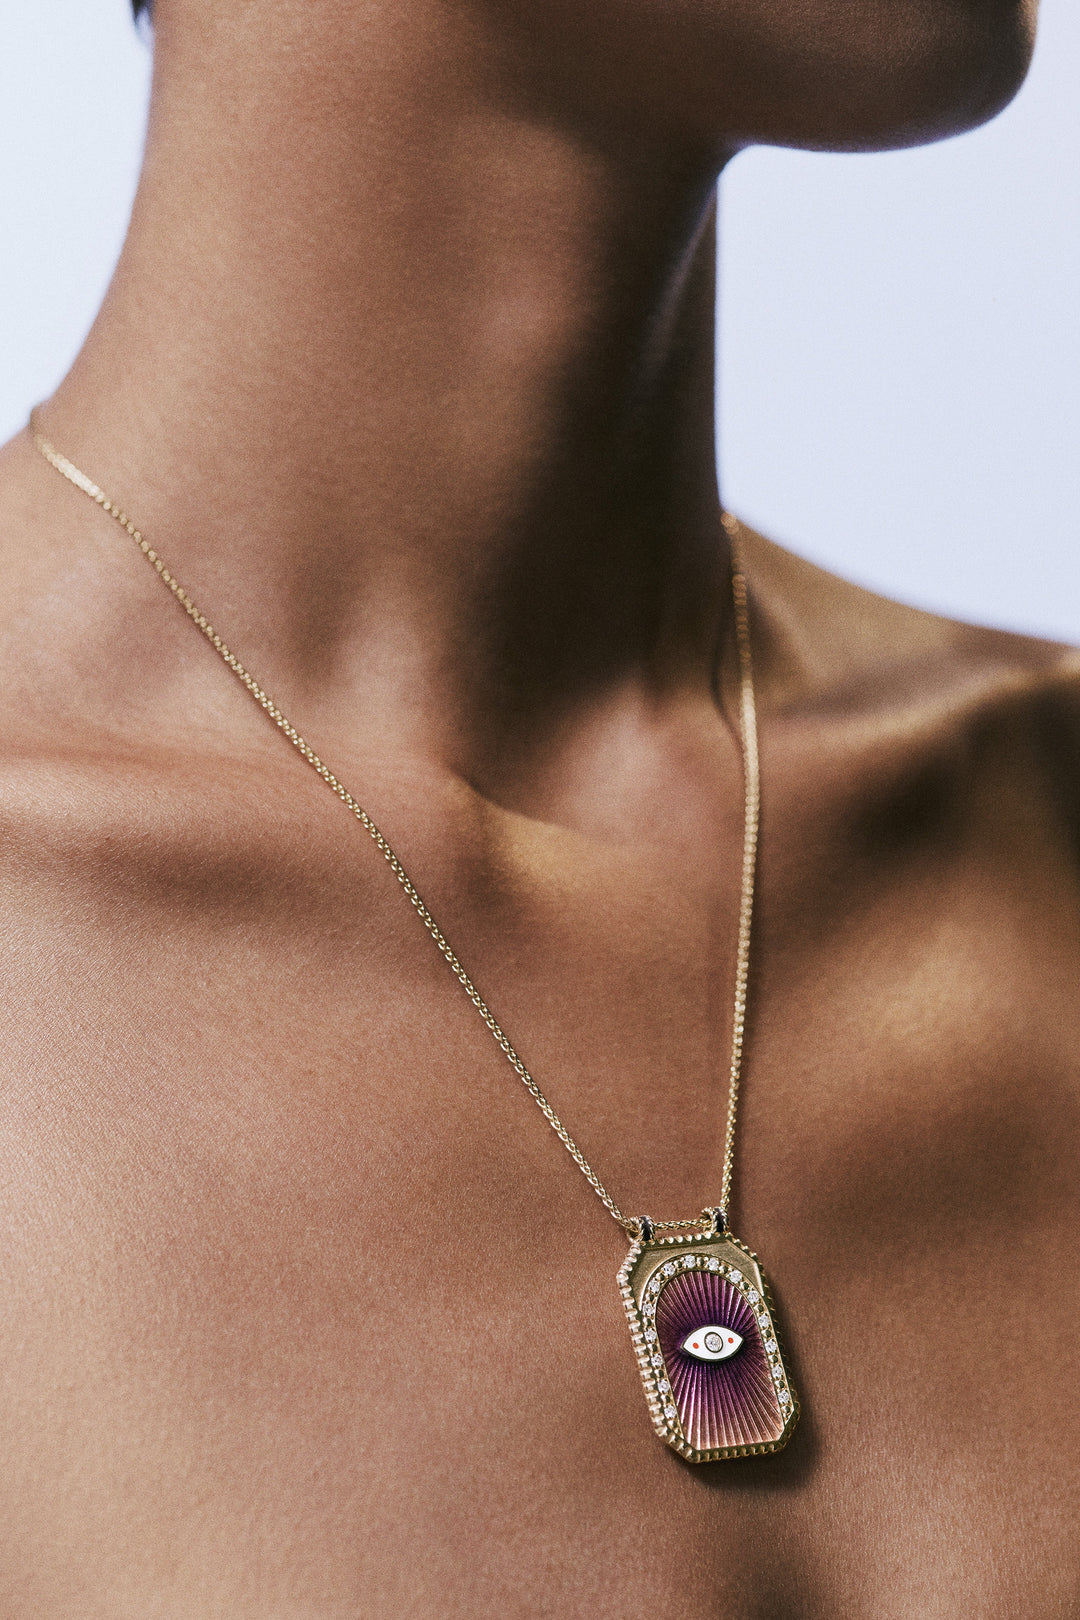 Spiga Chain, Necklaces, Ileana Makri, Jewelry